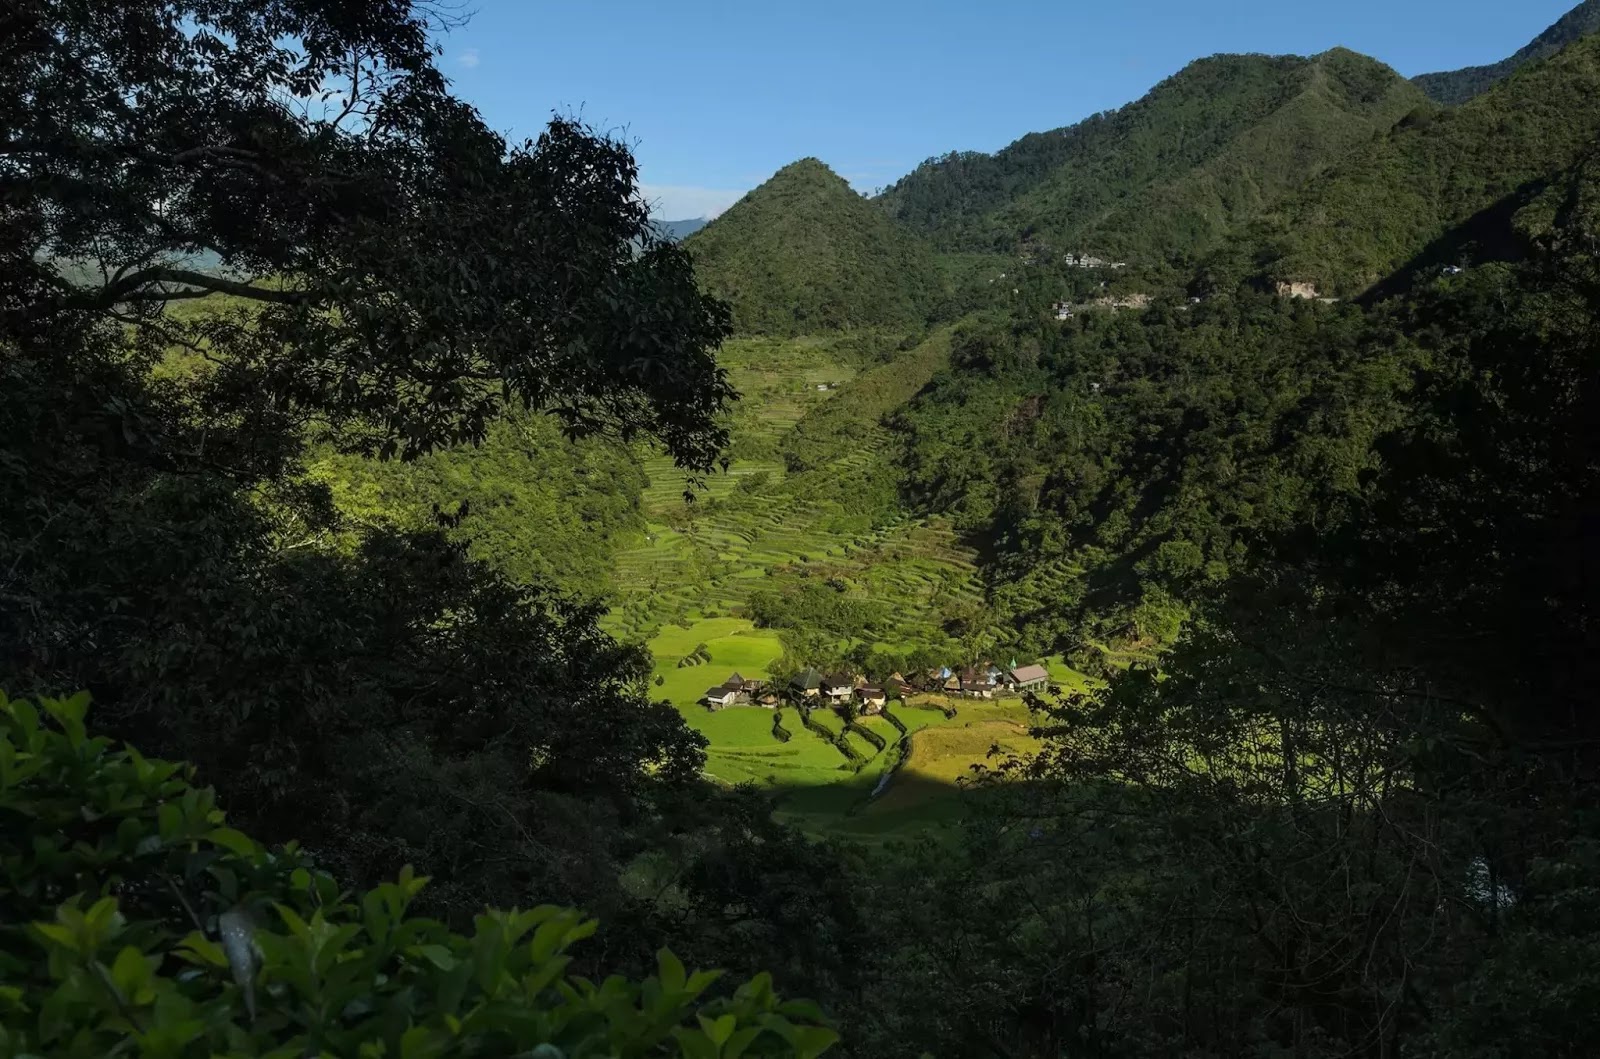 Bangaan Rice Terraces Landscape View 8th Wonder Ifugao Cordillera Administrative Region Philippines